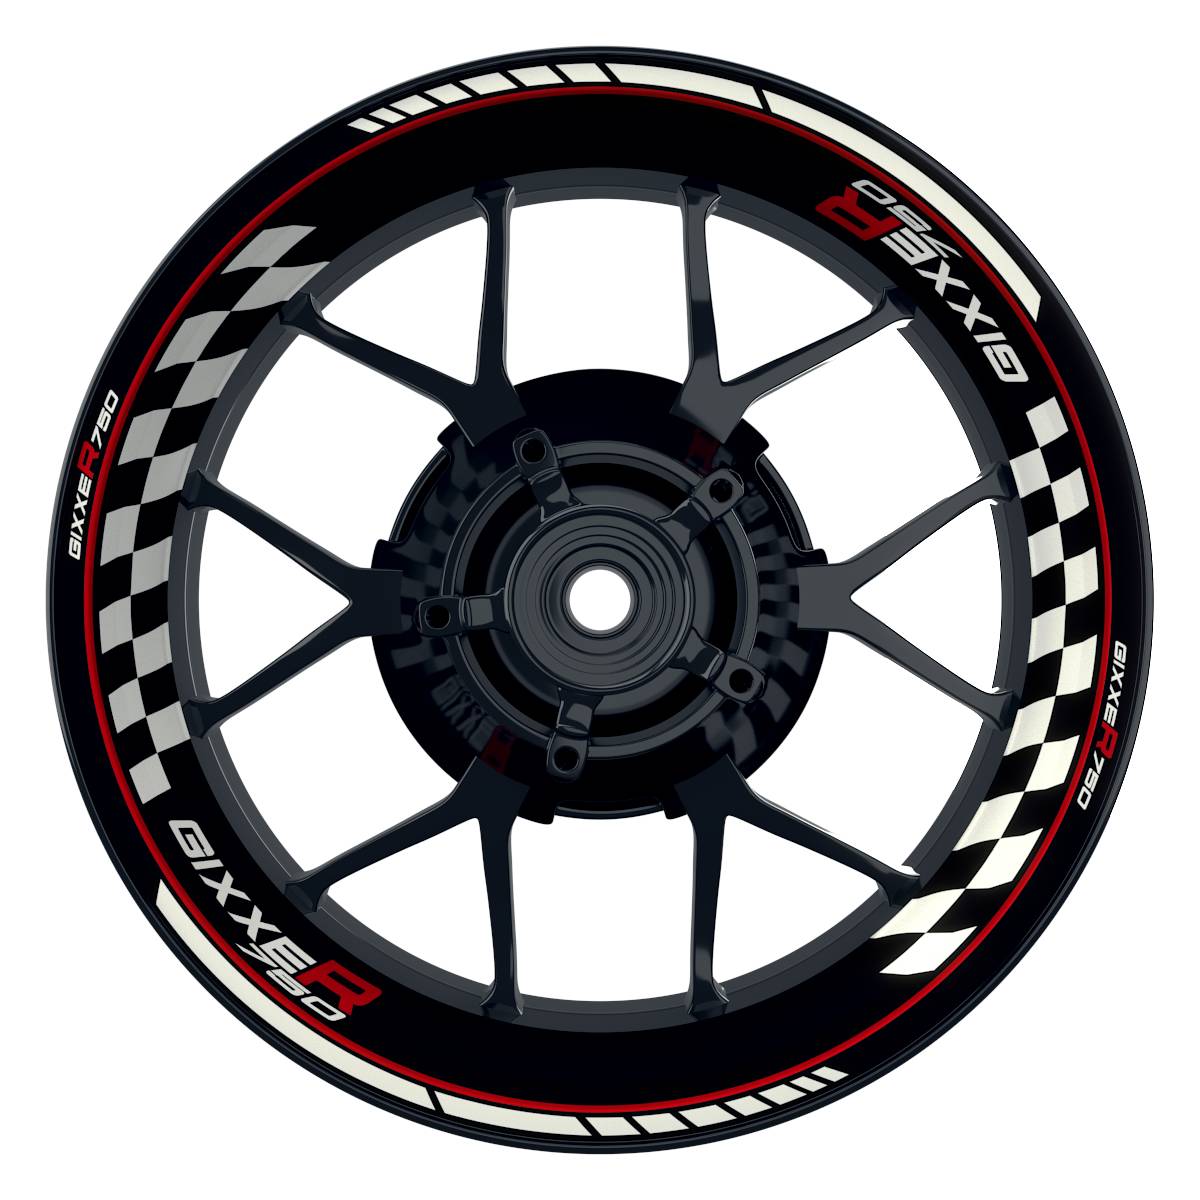 GIXXER750 Grid schwarz rot Wheelsticker Felgenaufkleber